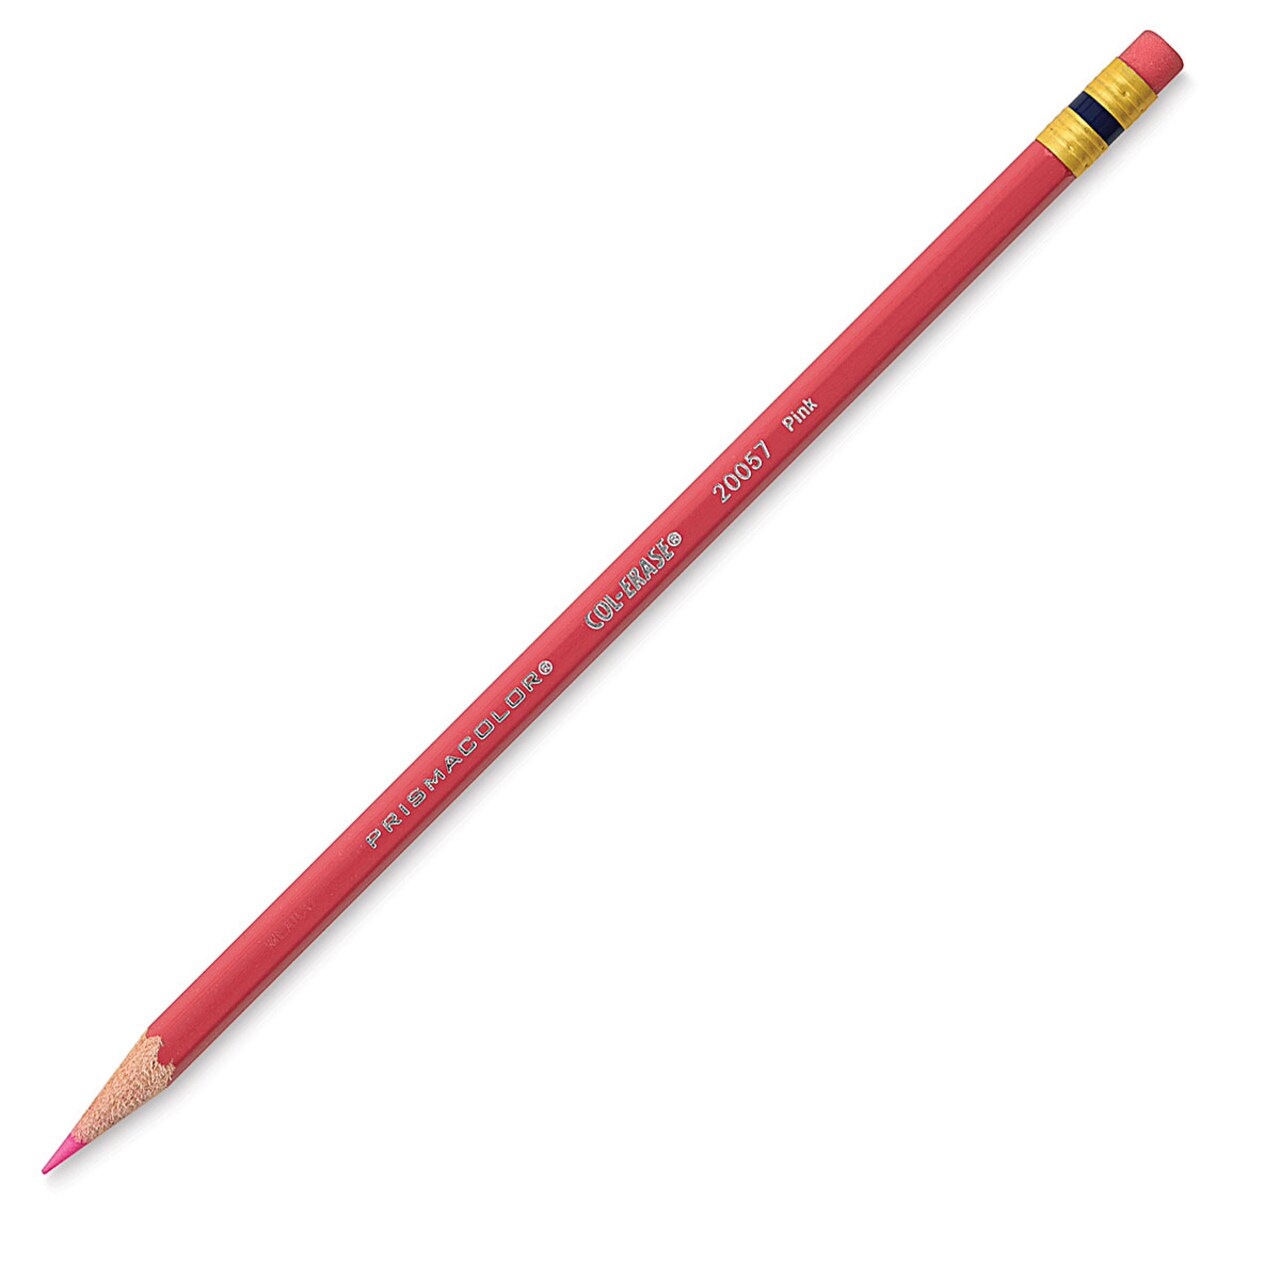 Prismacolor ColErase Pencils and Sets